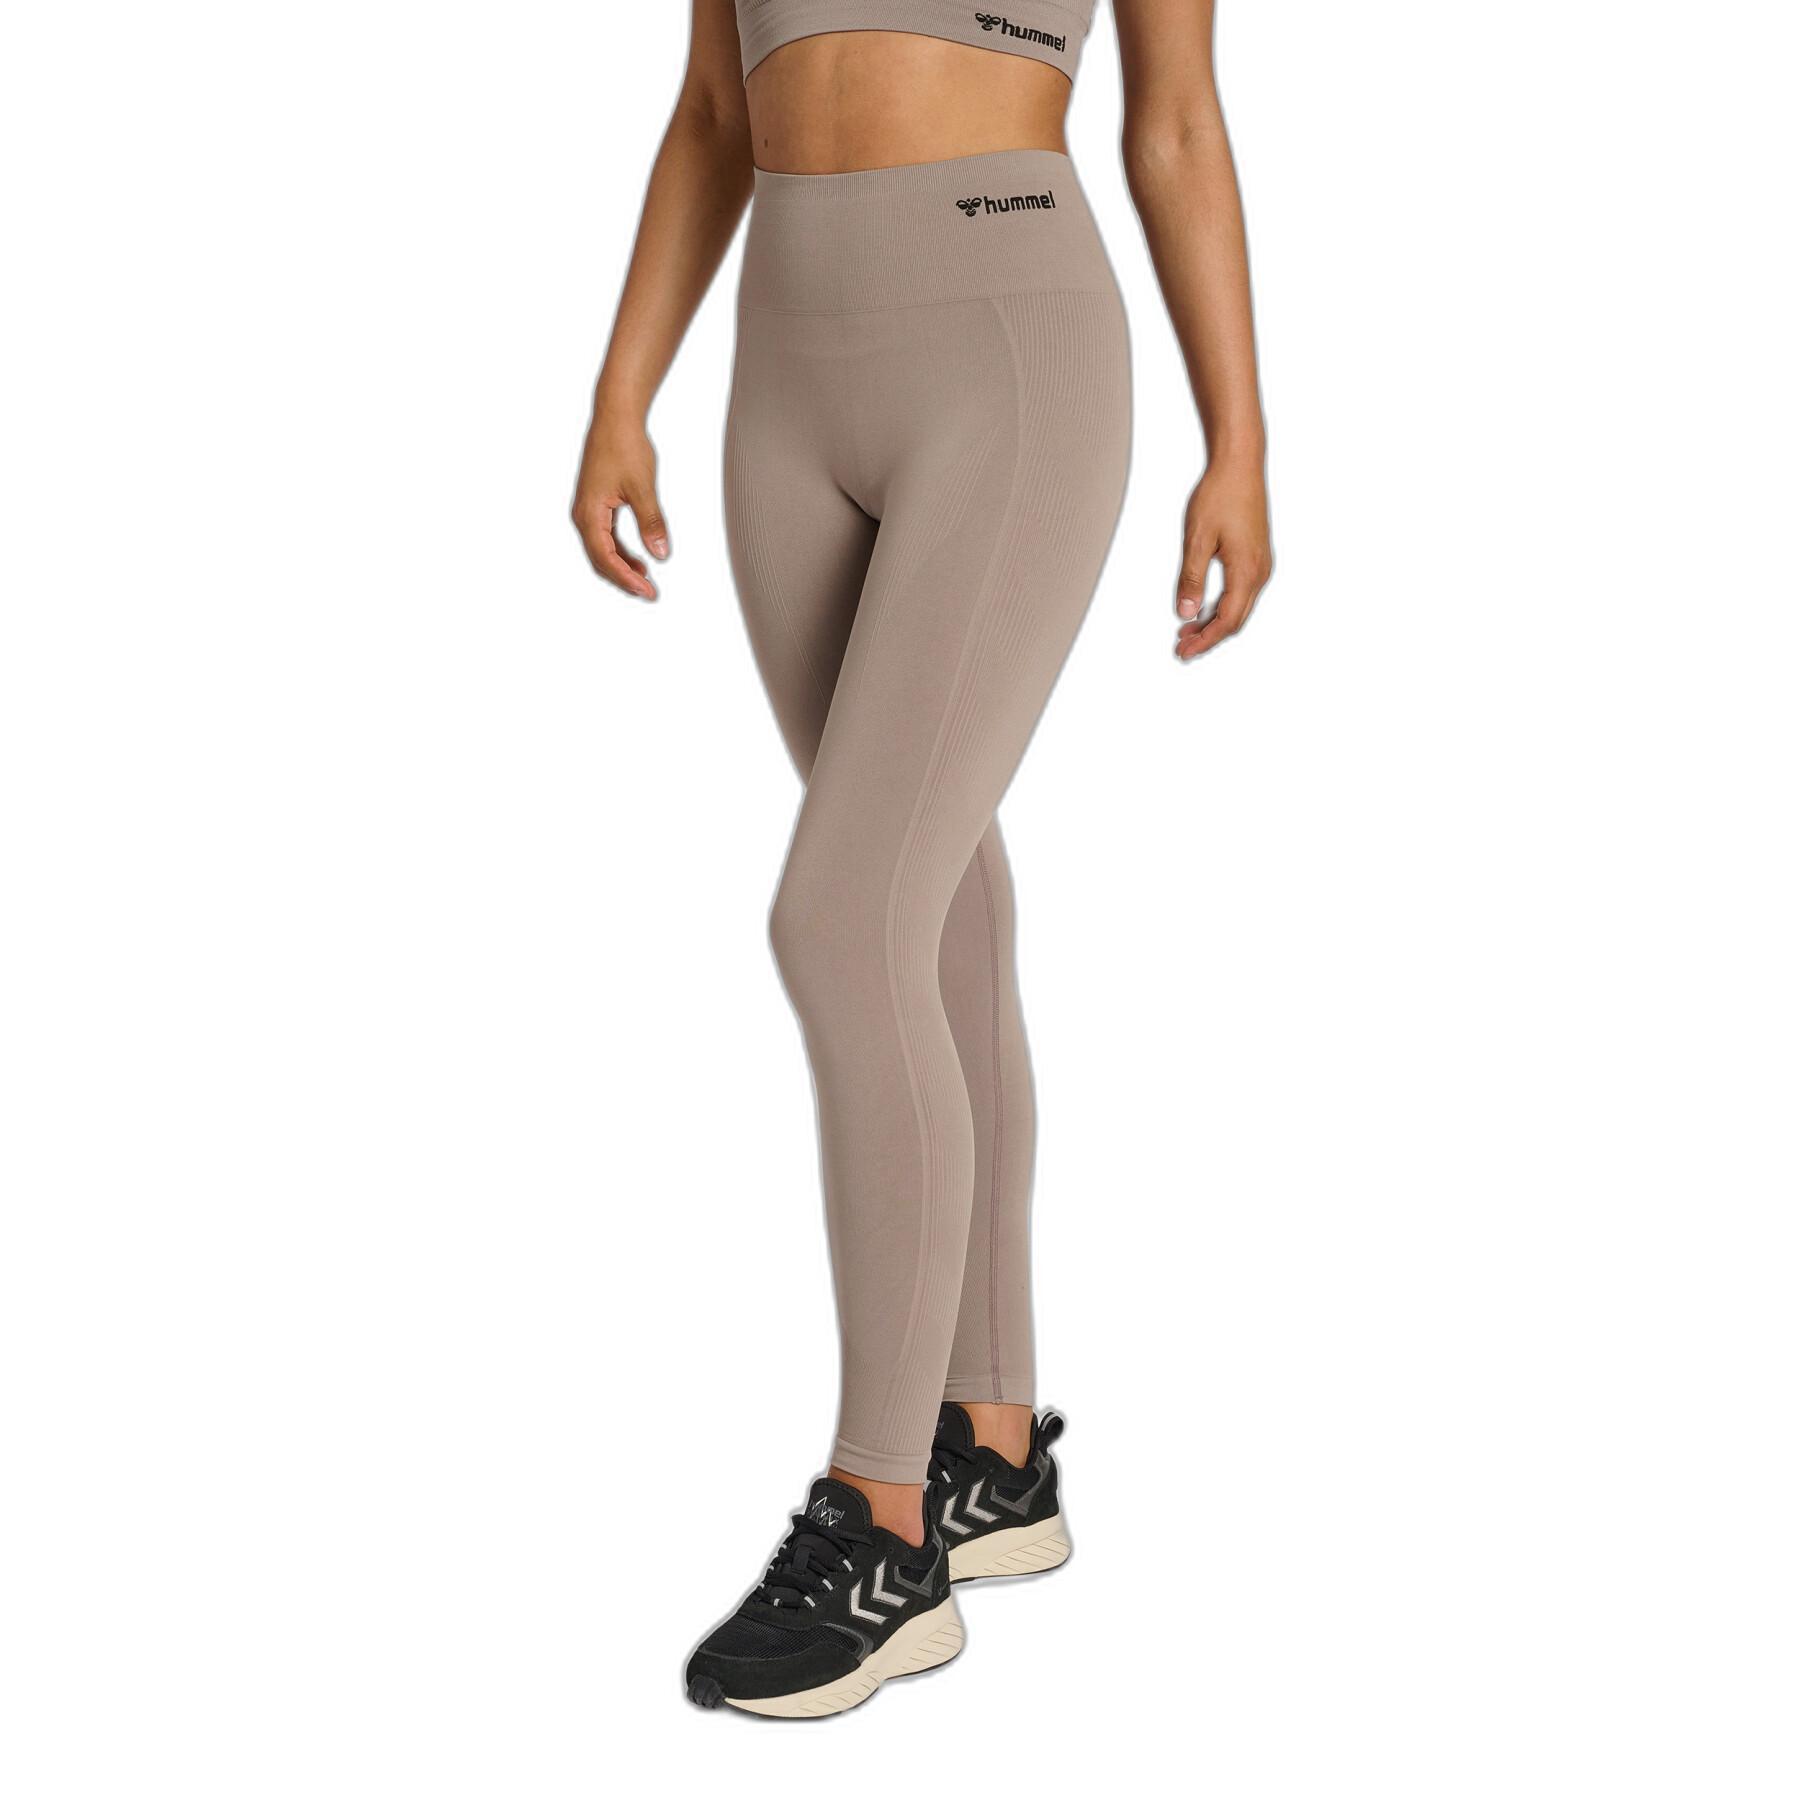 Legging top - Hummel - TIF Hummel - Lifestyle Brands woman